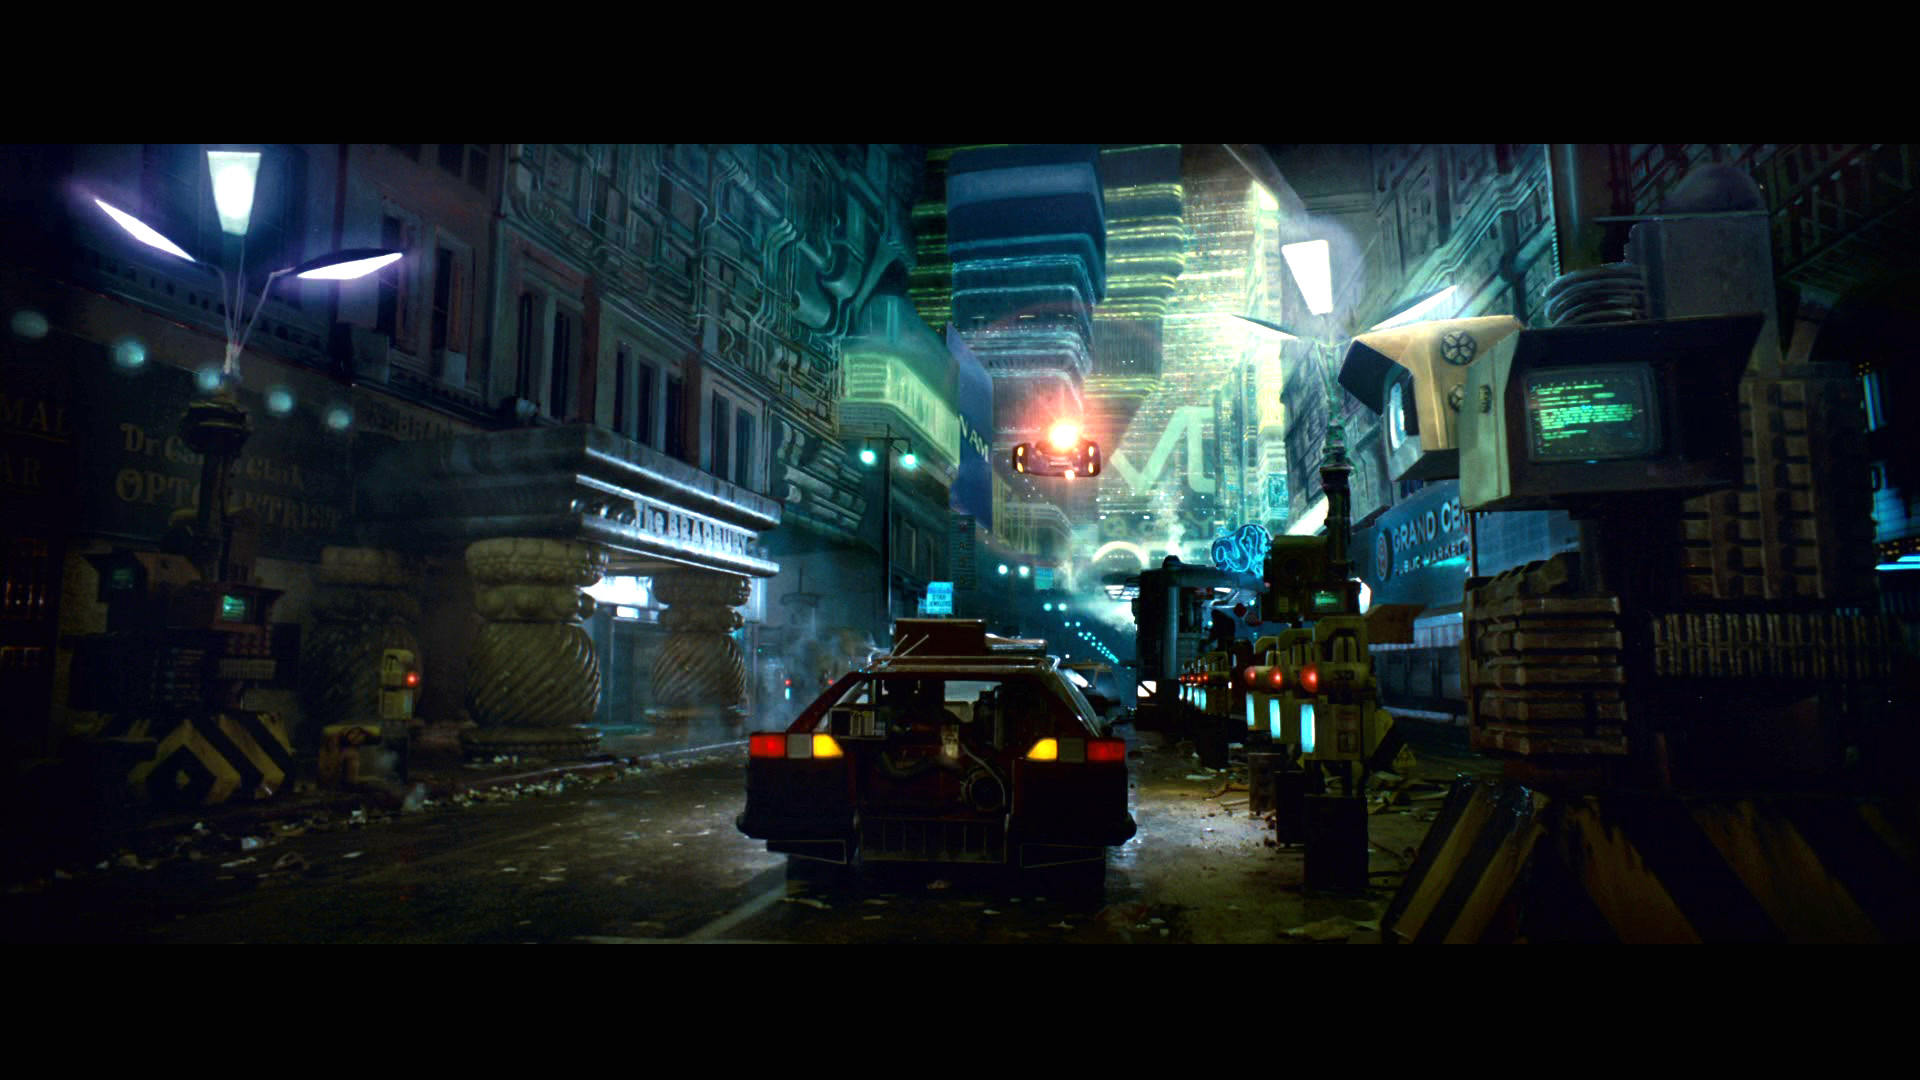 1920x1080 BLADE RUNNER drama sci-Fi thriller action city fs wallpaper background